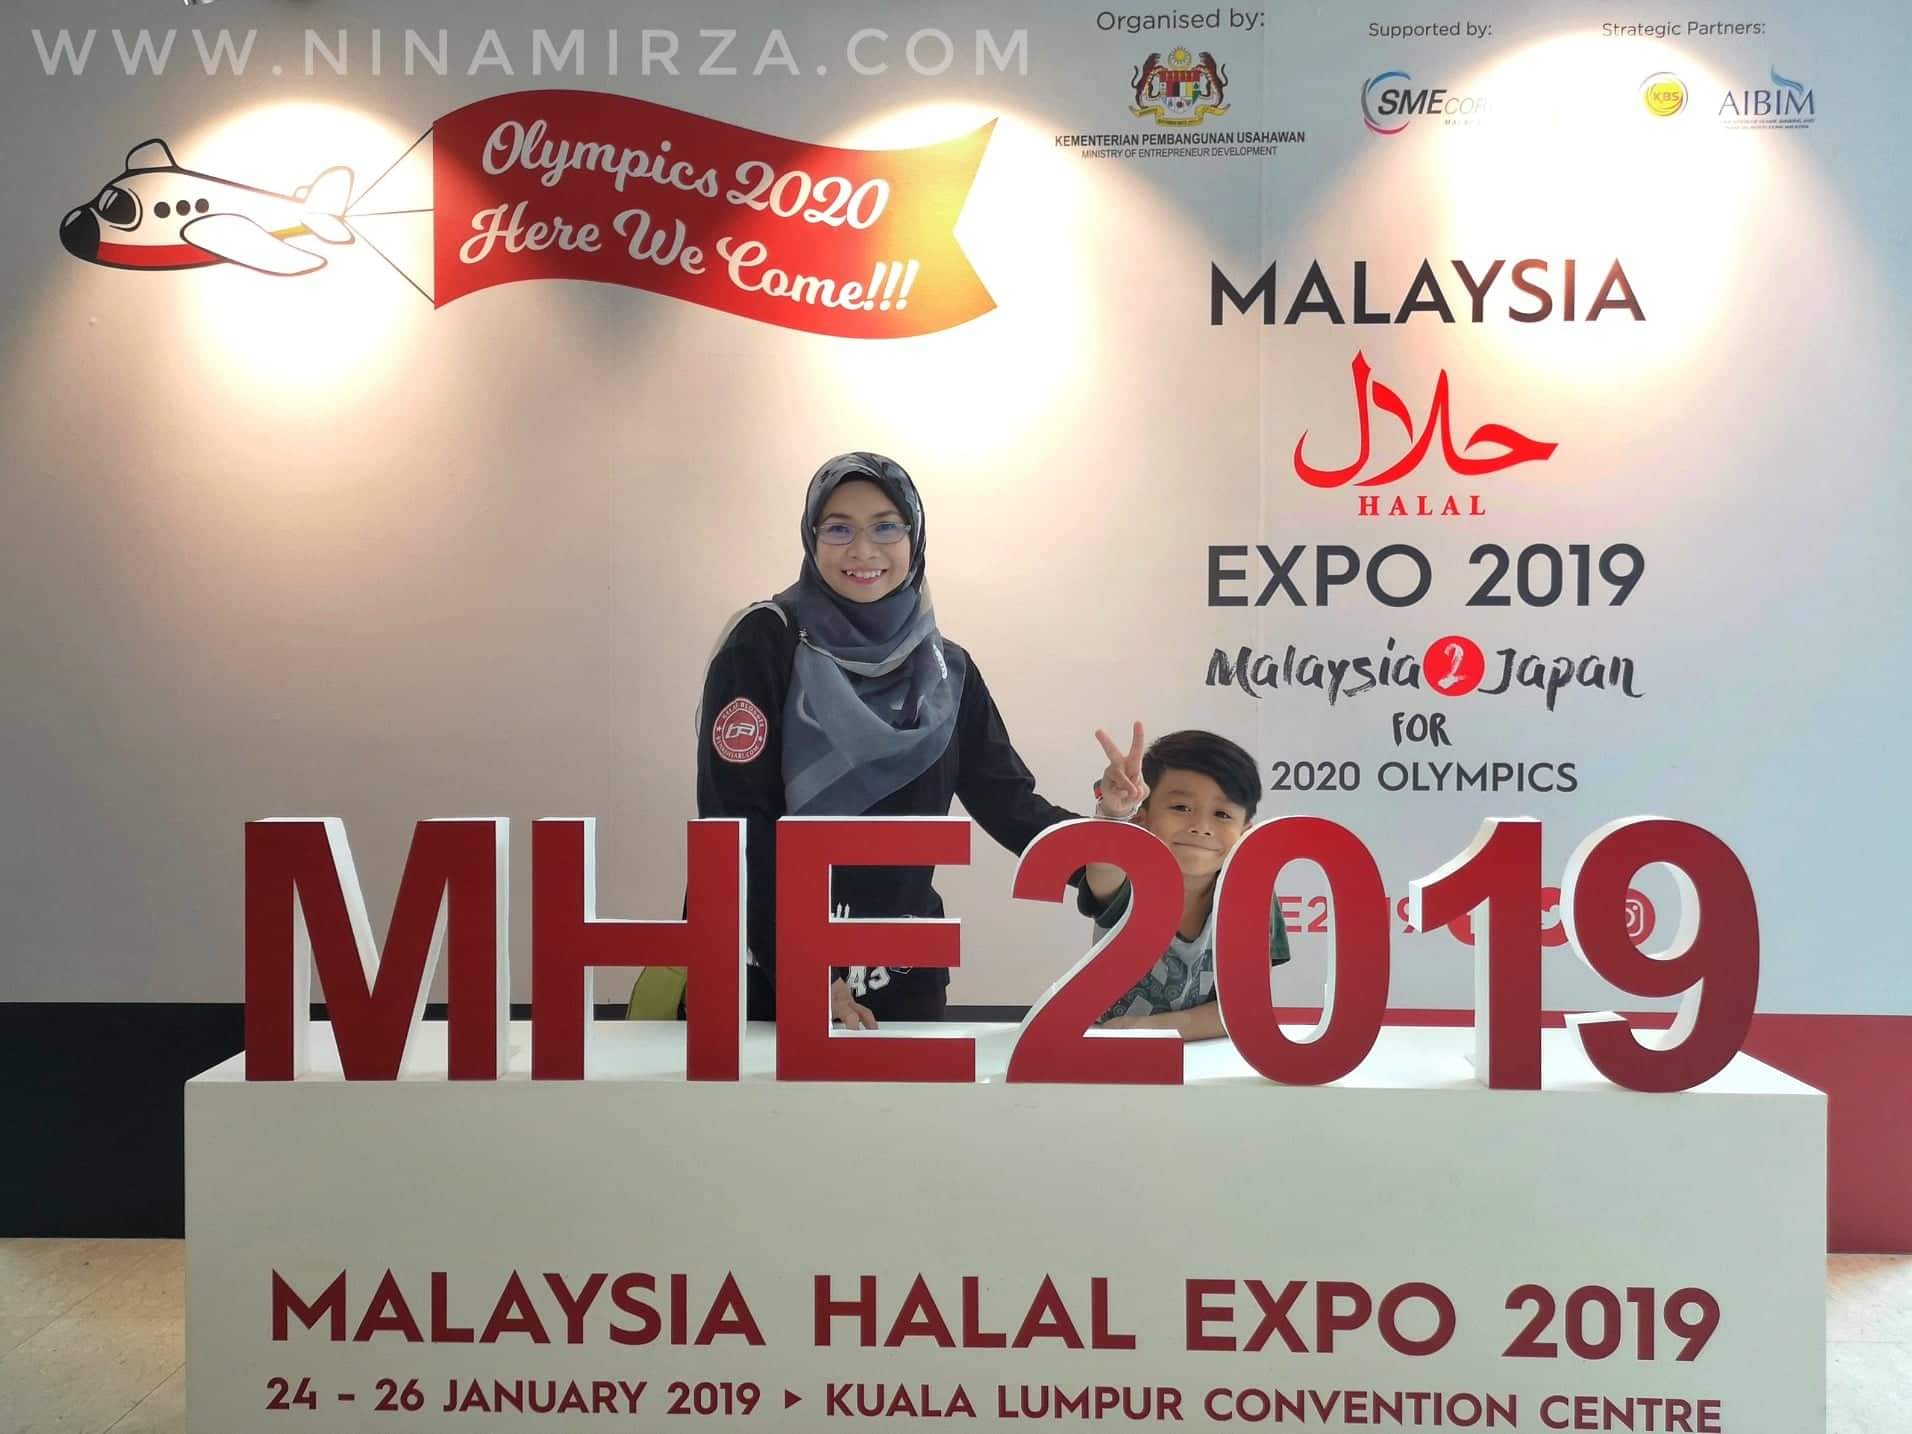 Malaysia Halal Expo 2019 for Olympics 2020 Japan